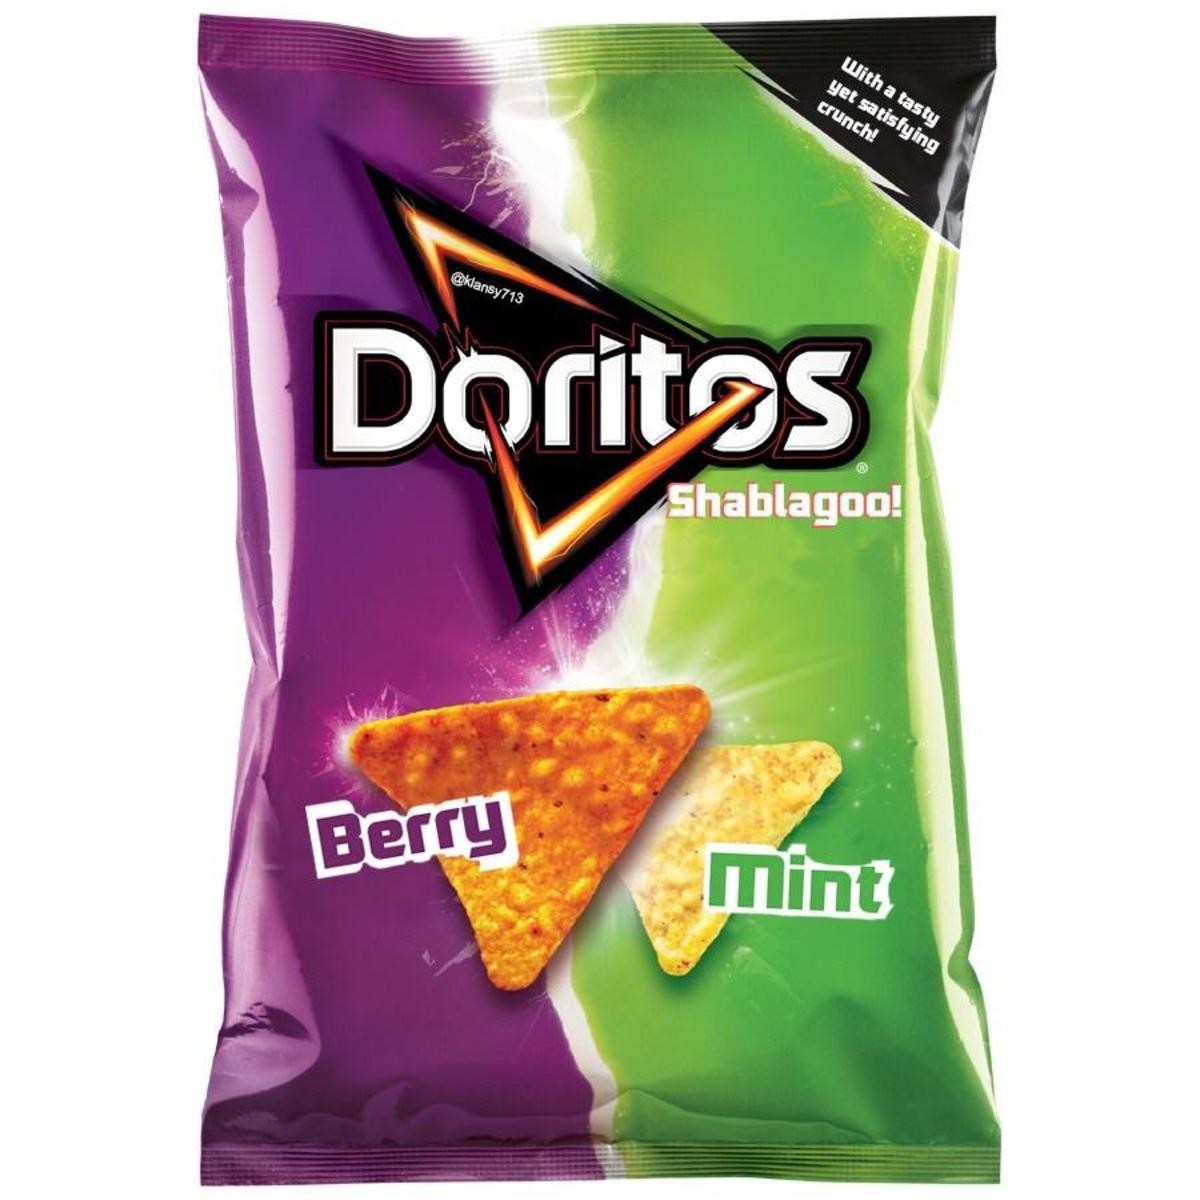 New and Exiting Doritos flavors! 